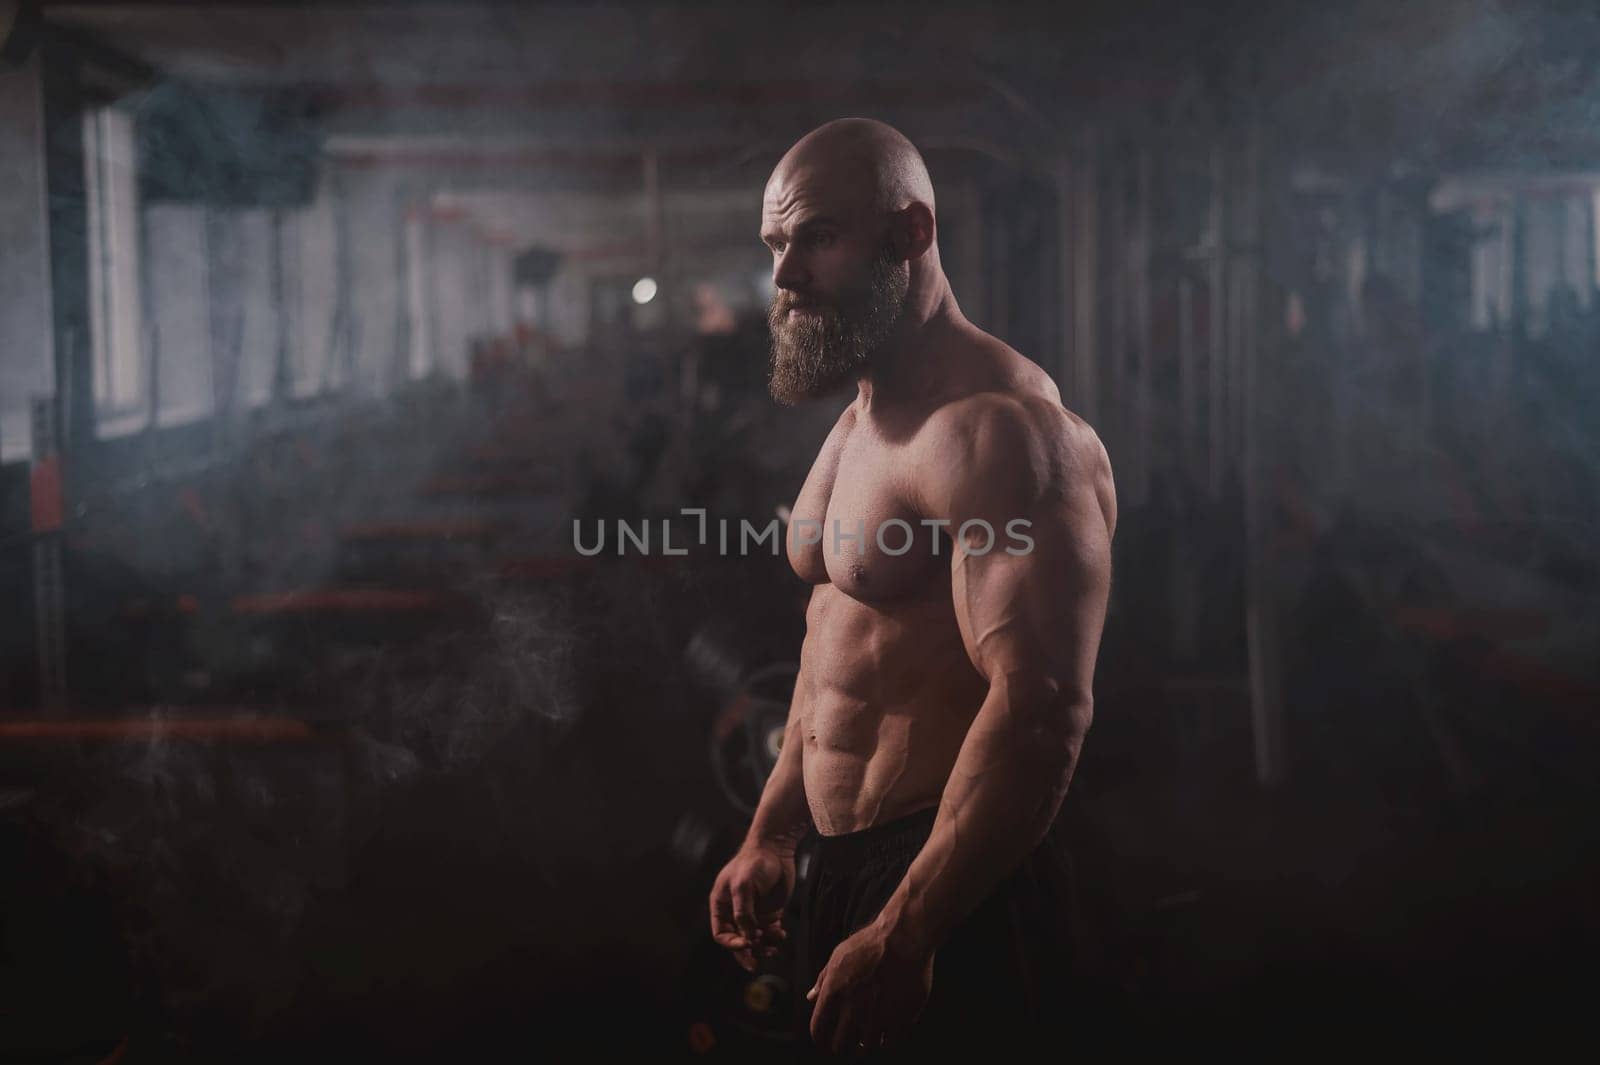 Caucasian bald man posing in the gym